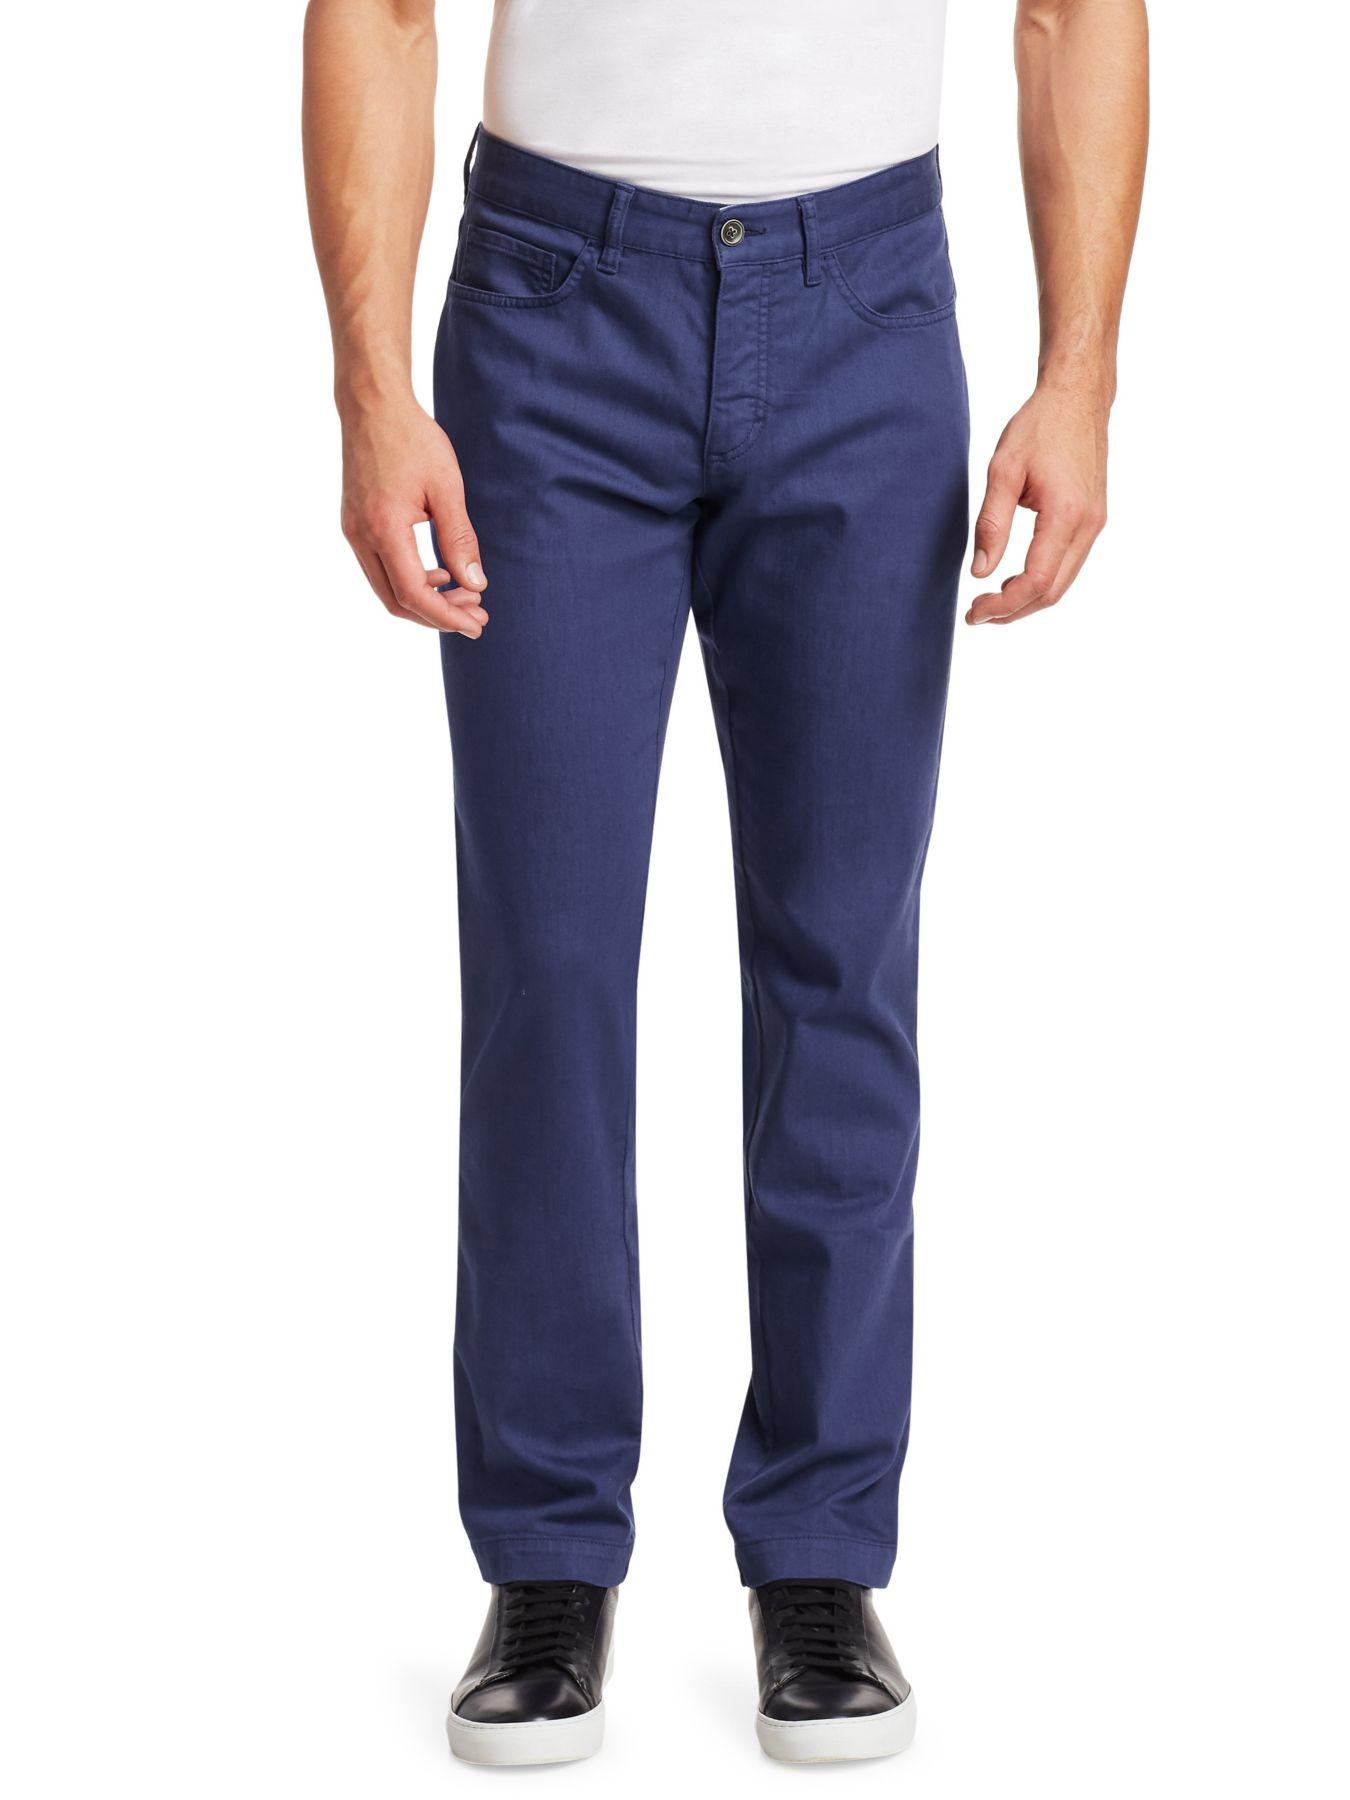 Saks Fifth Avenue Denim Collection Five-pocket Pants in Blue for Men - Lyst